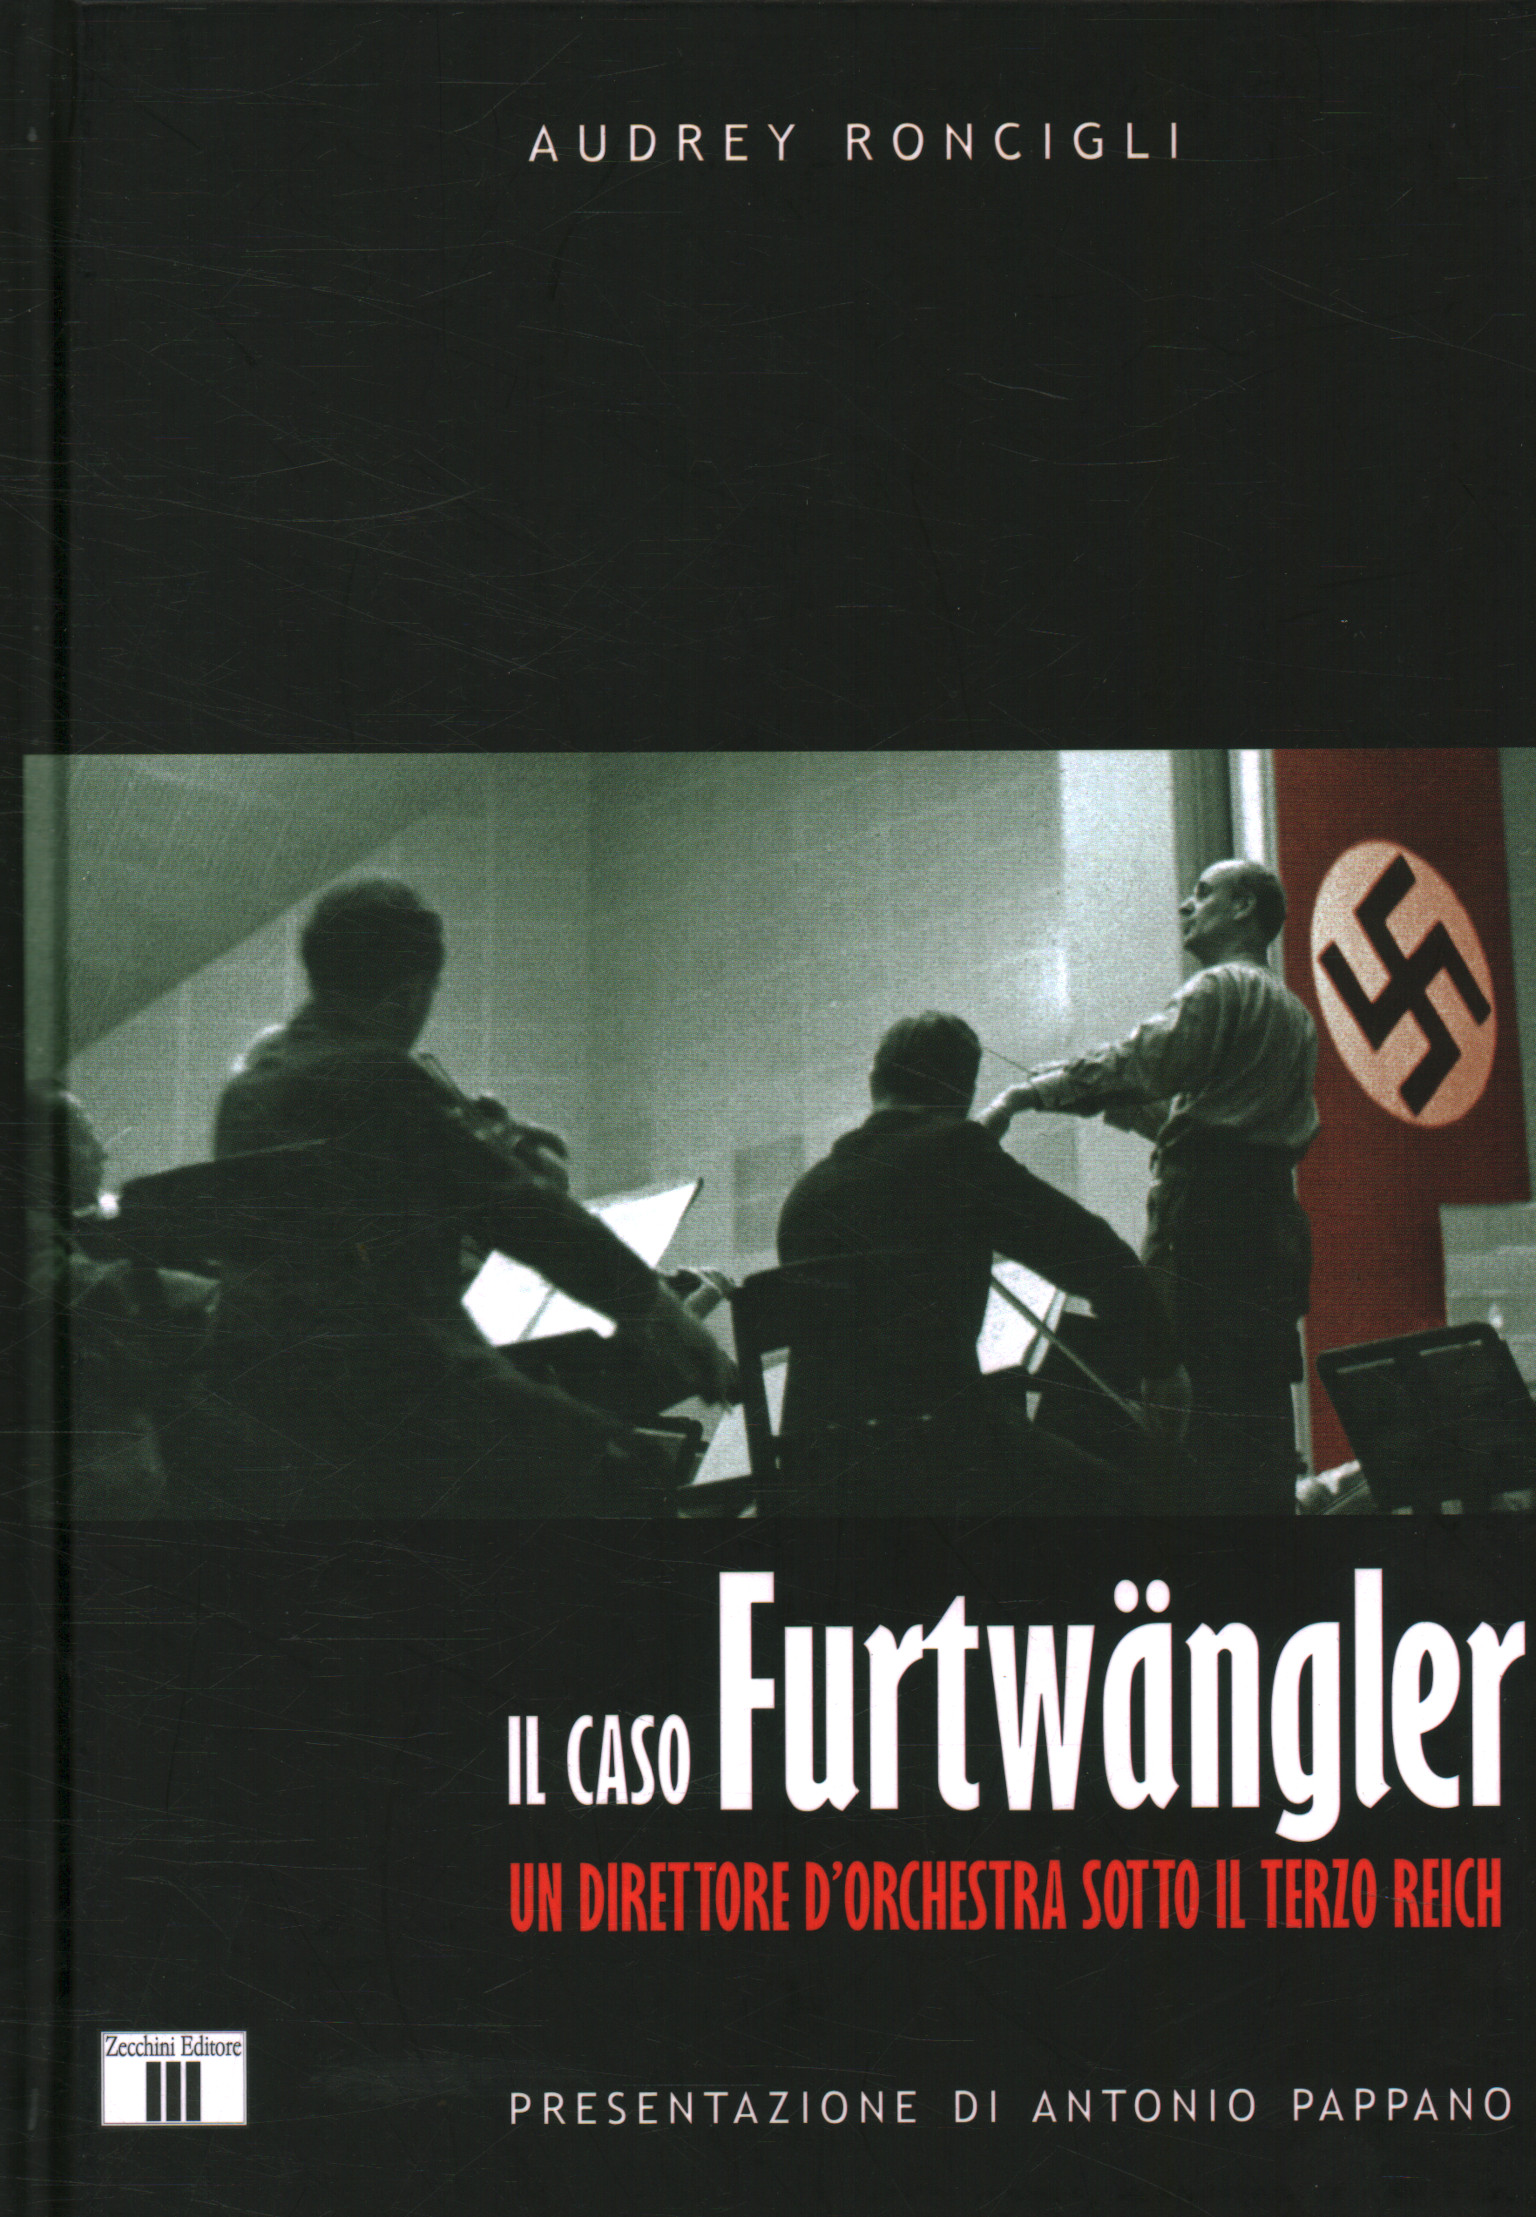 The Furtwangler case